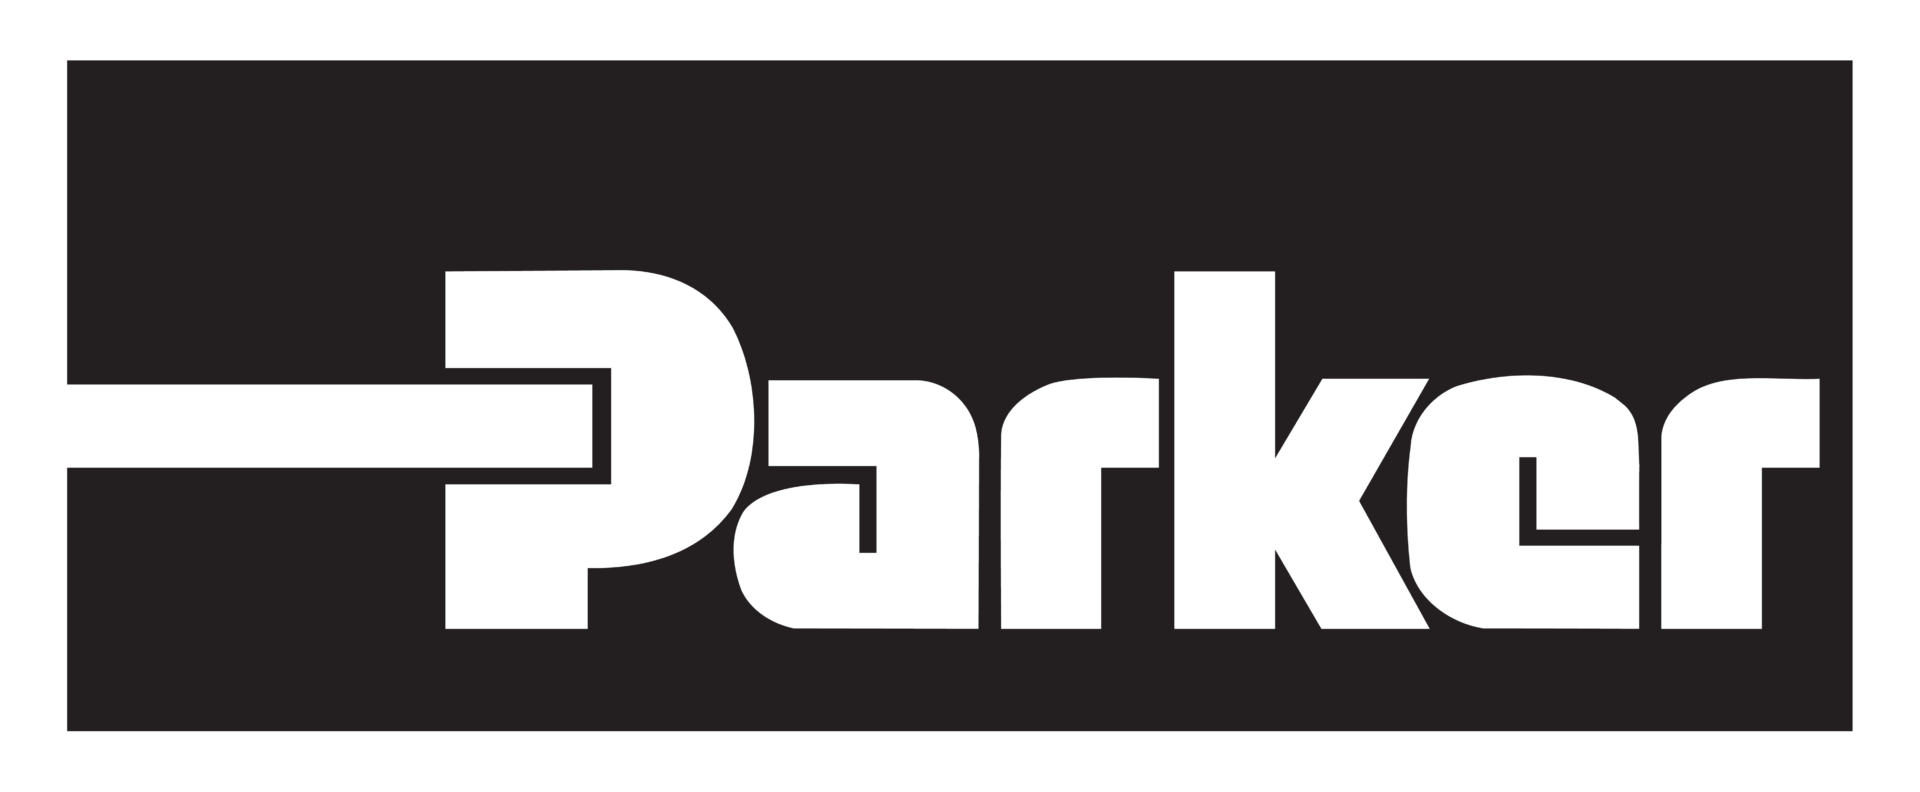 purepng.com parker hannifin logologobrand logoiconslogos 2515199387710dv6x - Product range